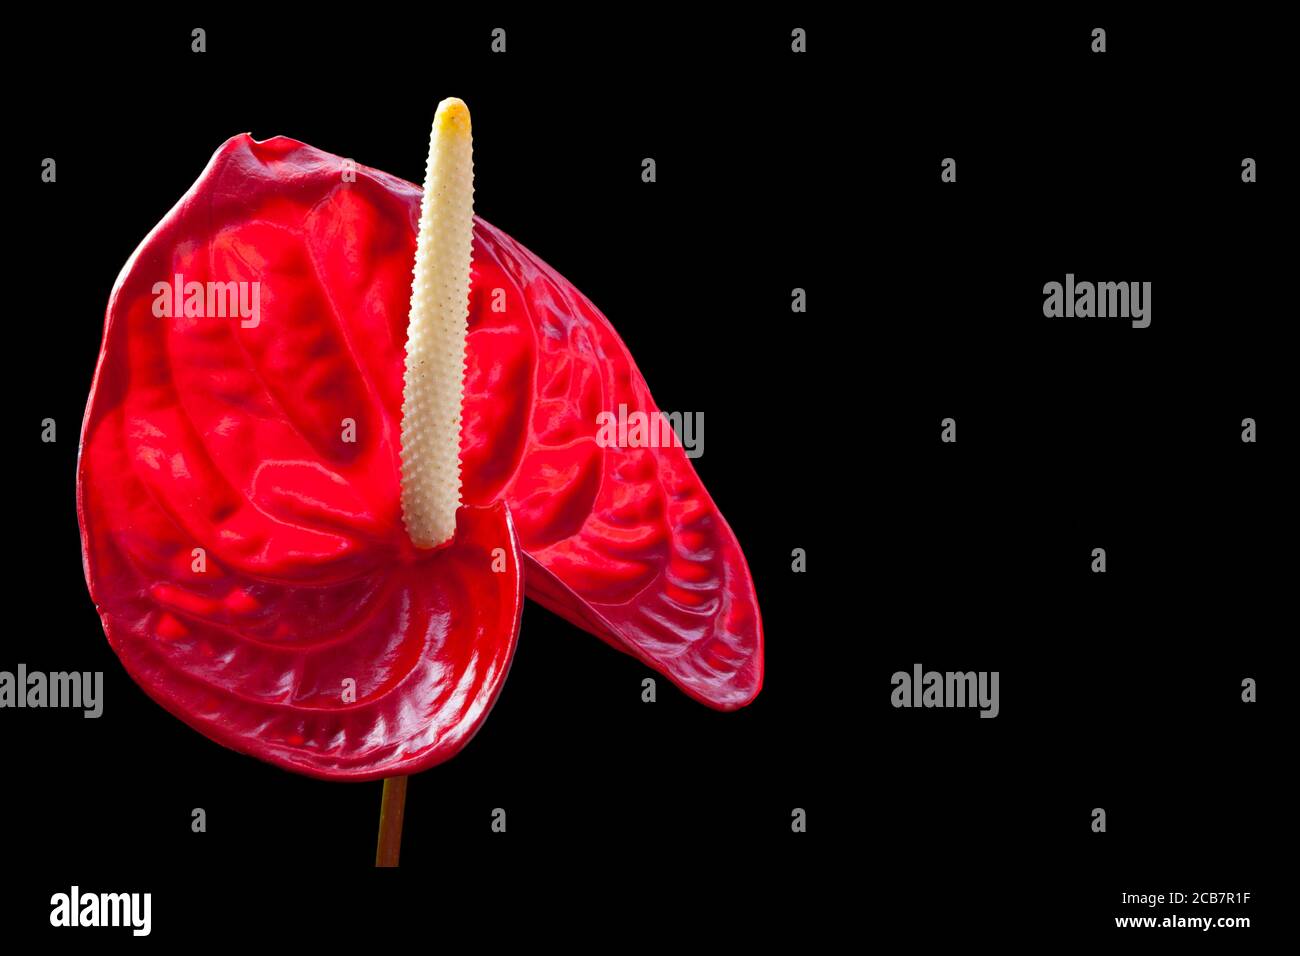 Anthurium / Anthurium Andraeanum, imagen de estudio de una flor roja sobre un fondo negro. Foto de stock